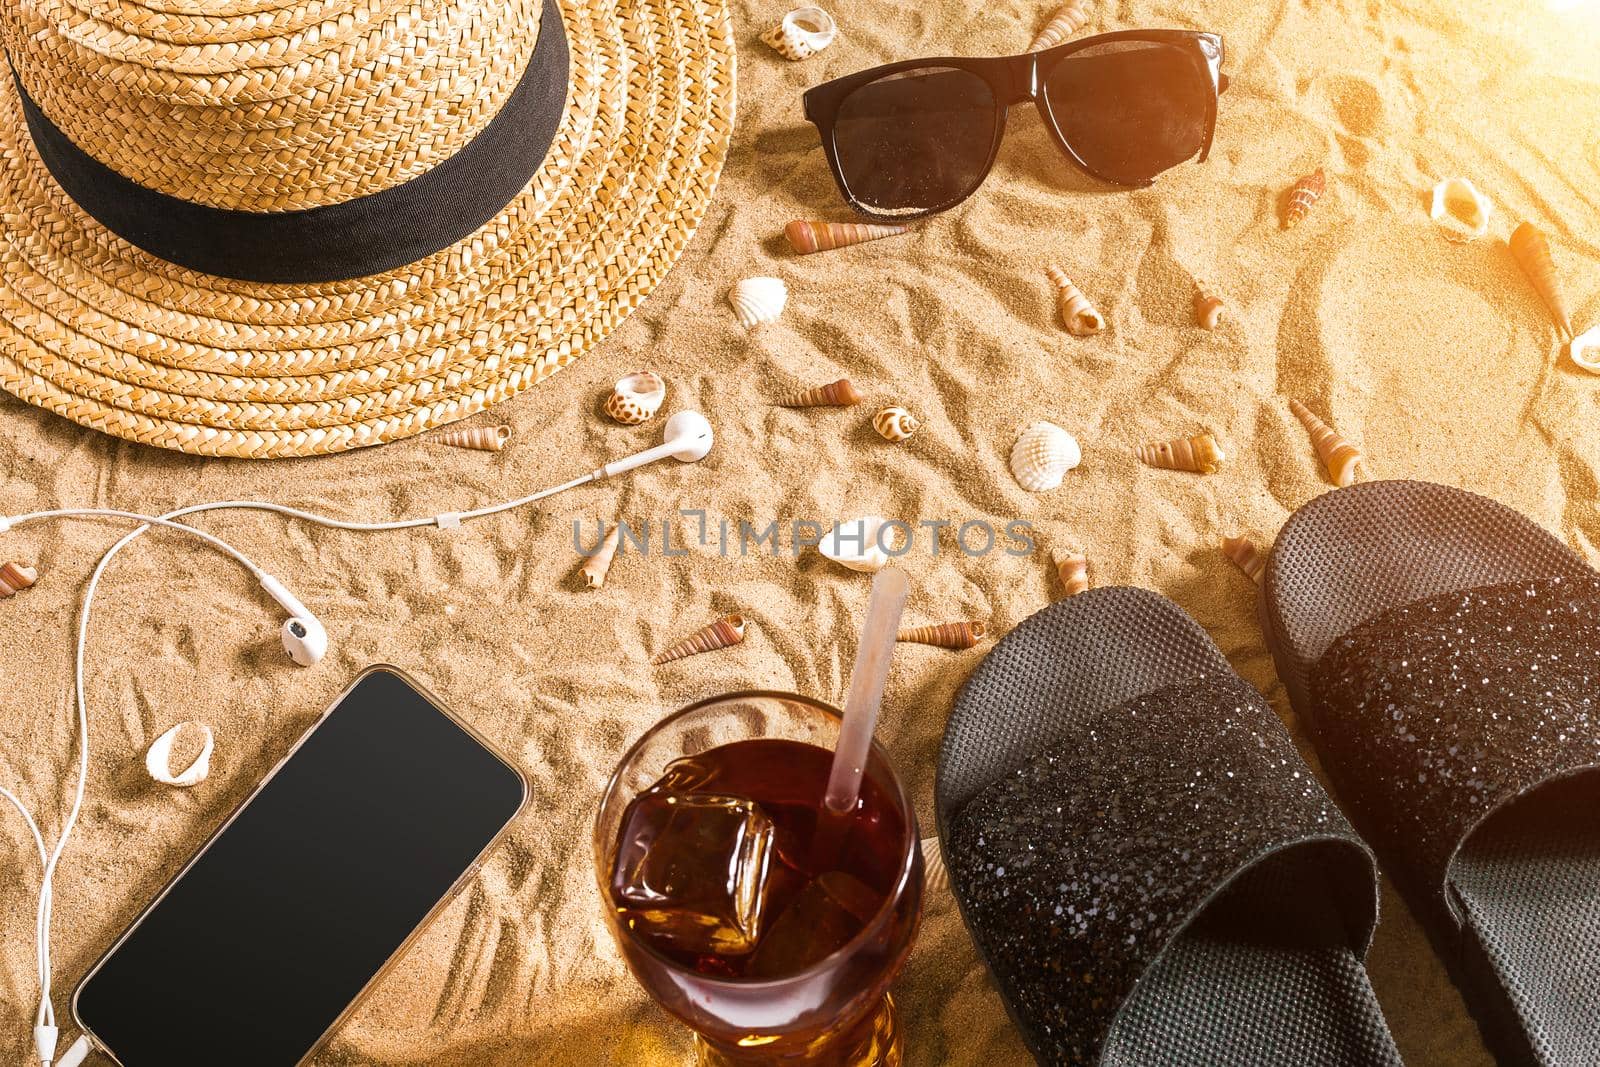 Summer beachwear, flip flops, hat, sunglasses and seashells on sand beach. by nazarovsergey